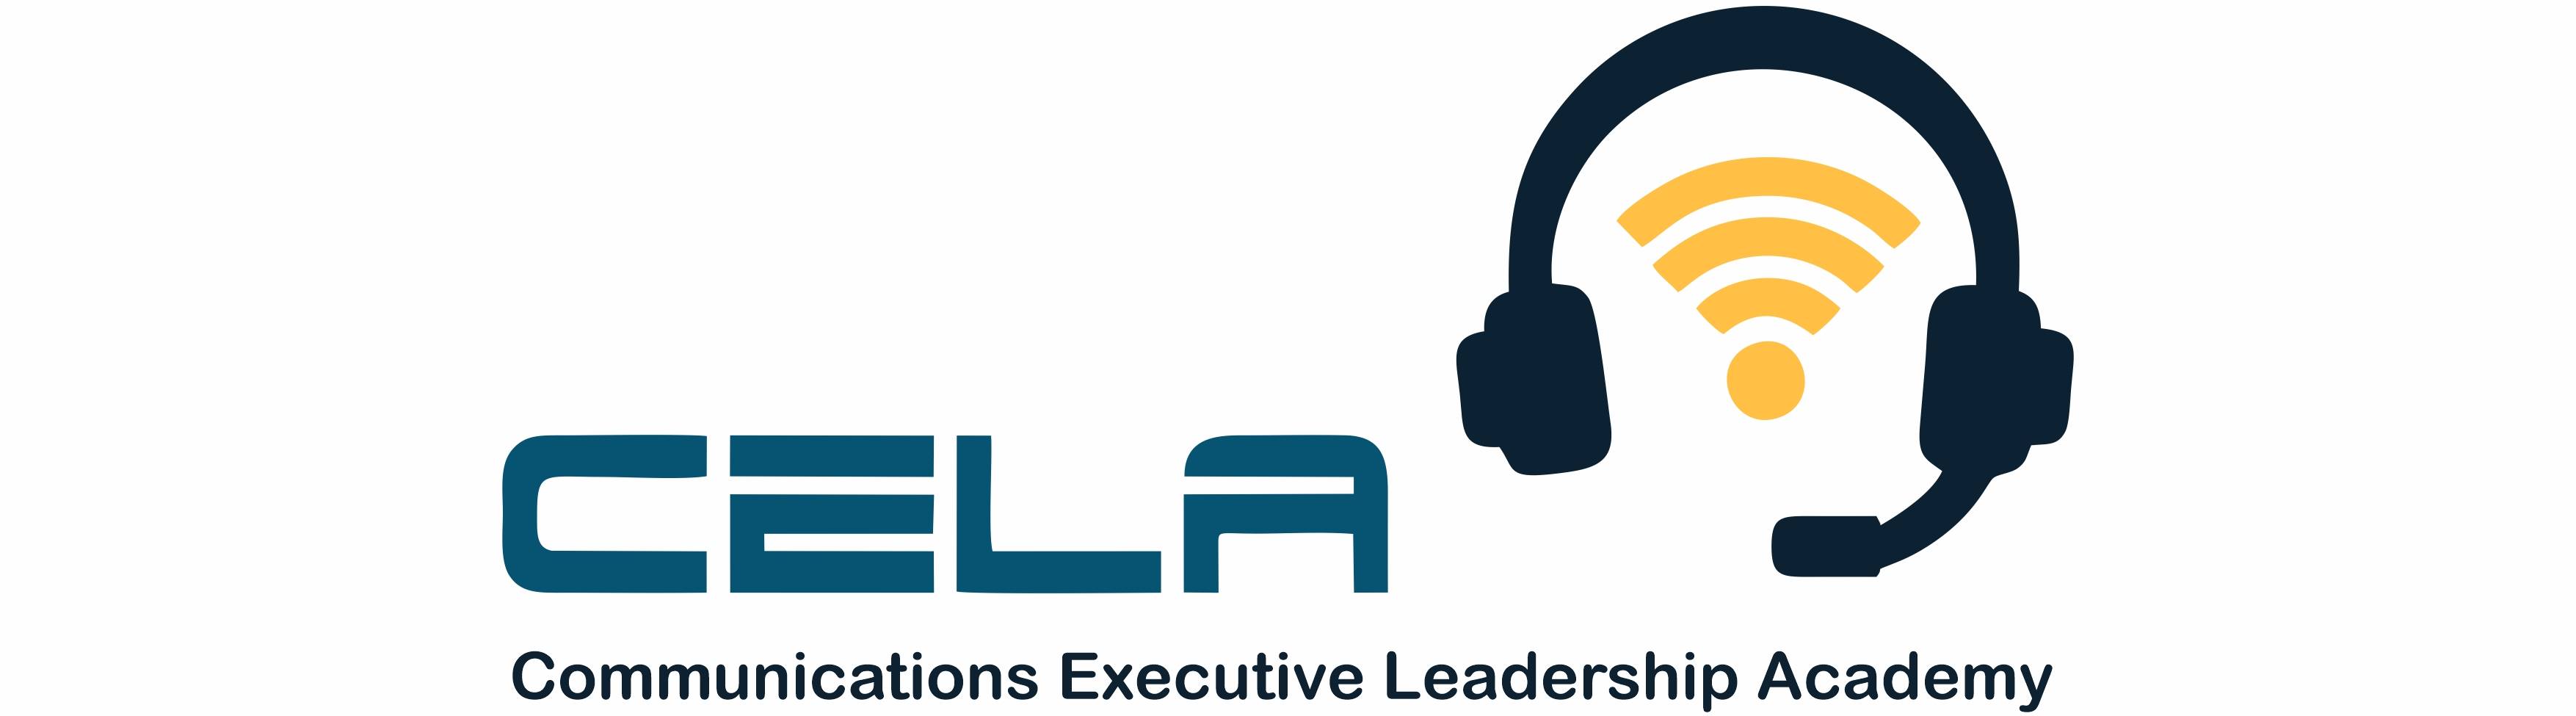 Communications Executive Leadership Academy